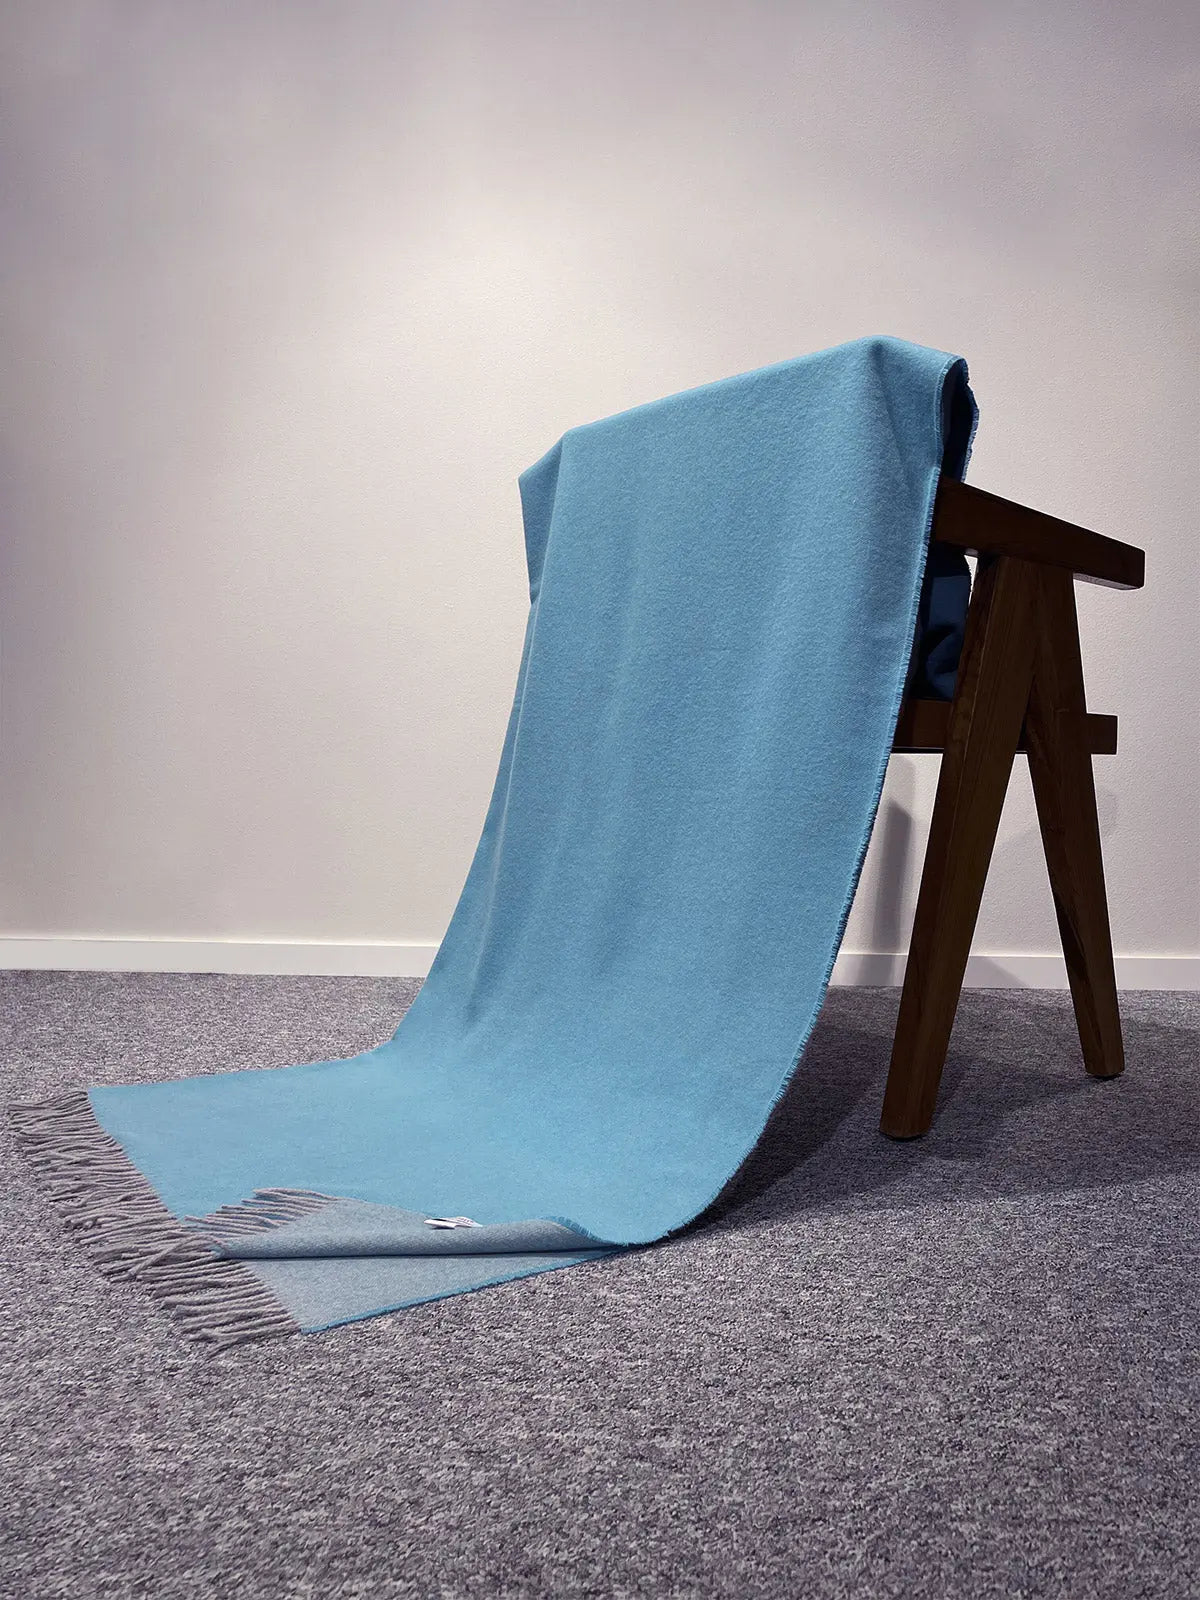 Blanket cashmere in light blue / light gray shades